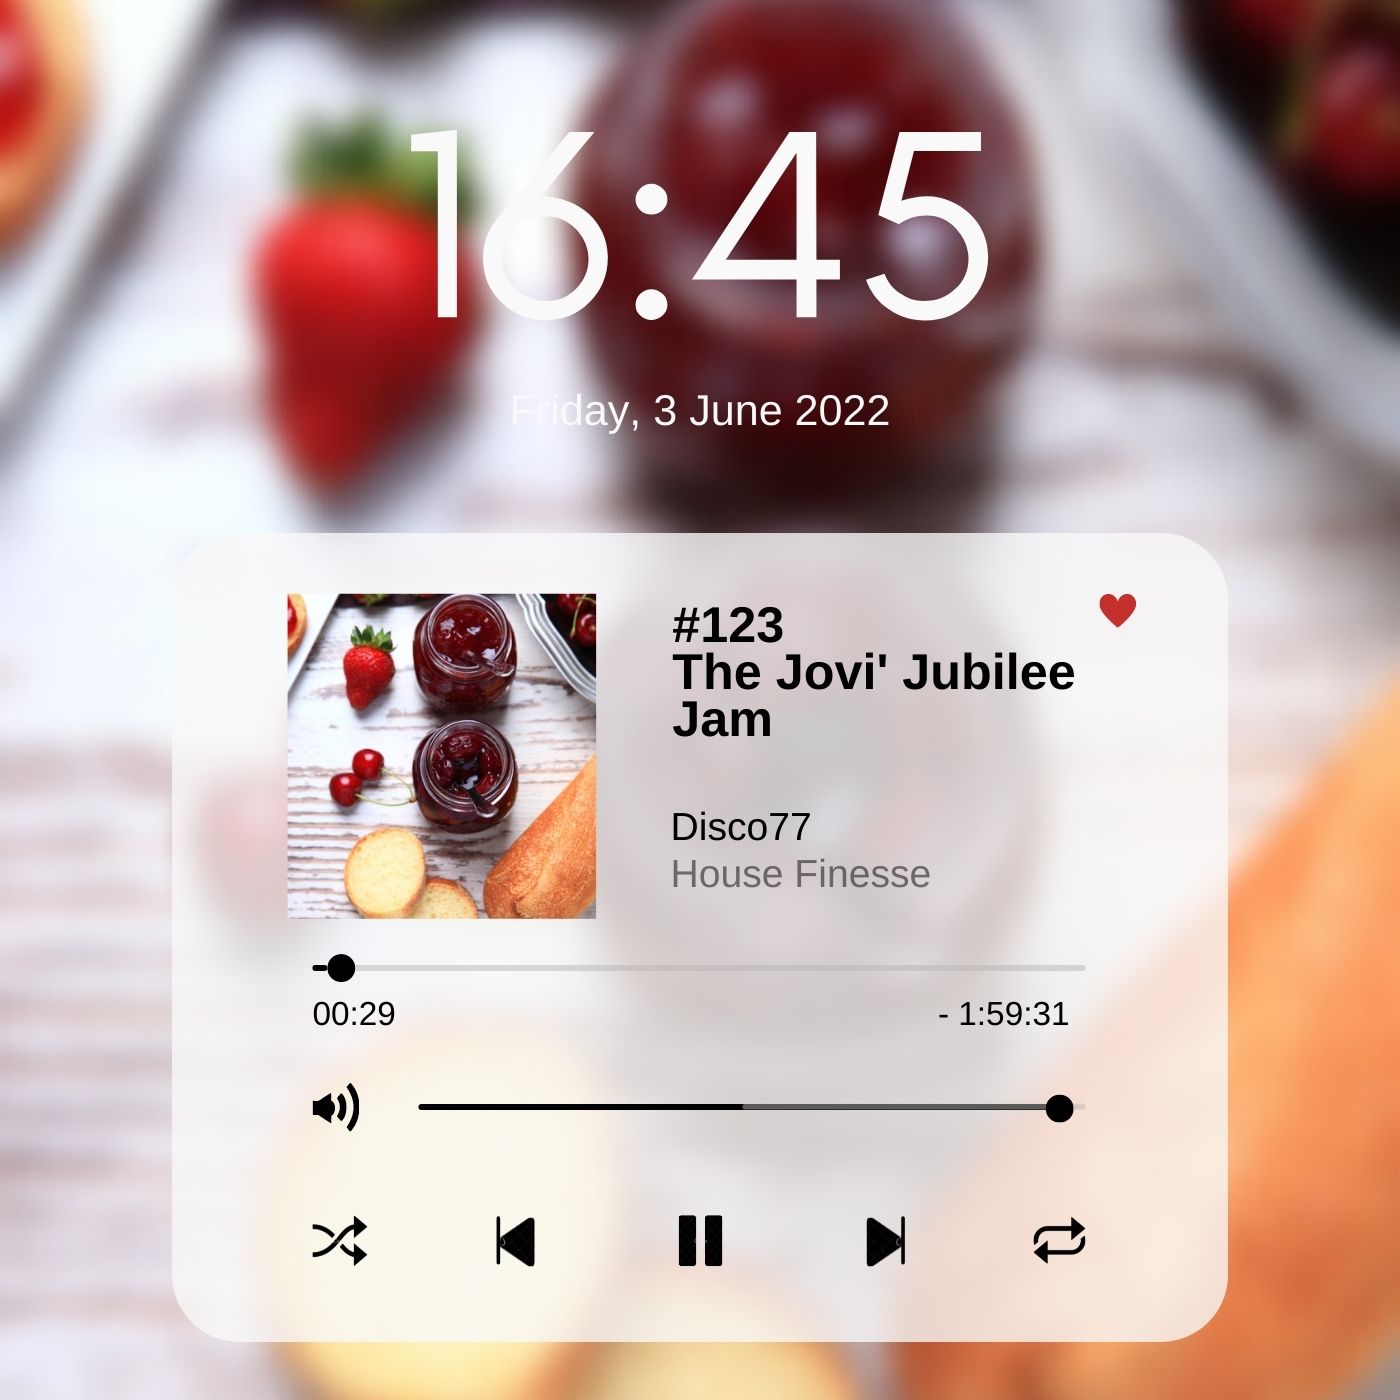 The Jovi’ Jubilee Jam with Disco77